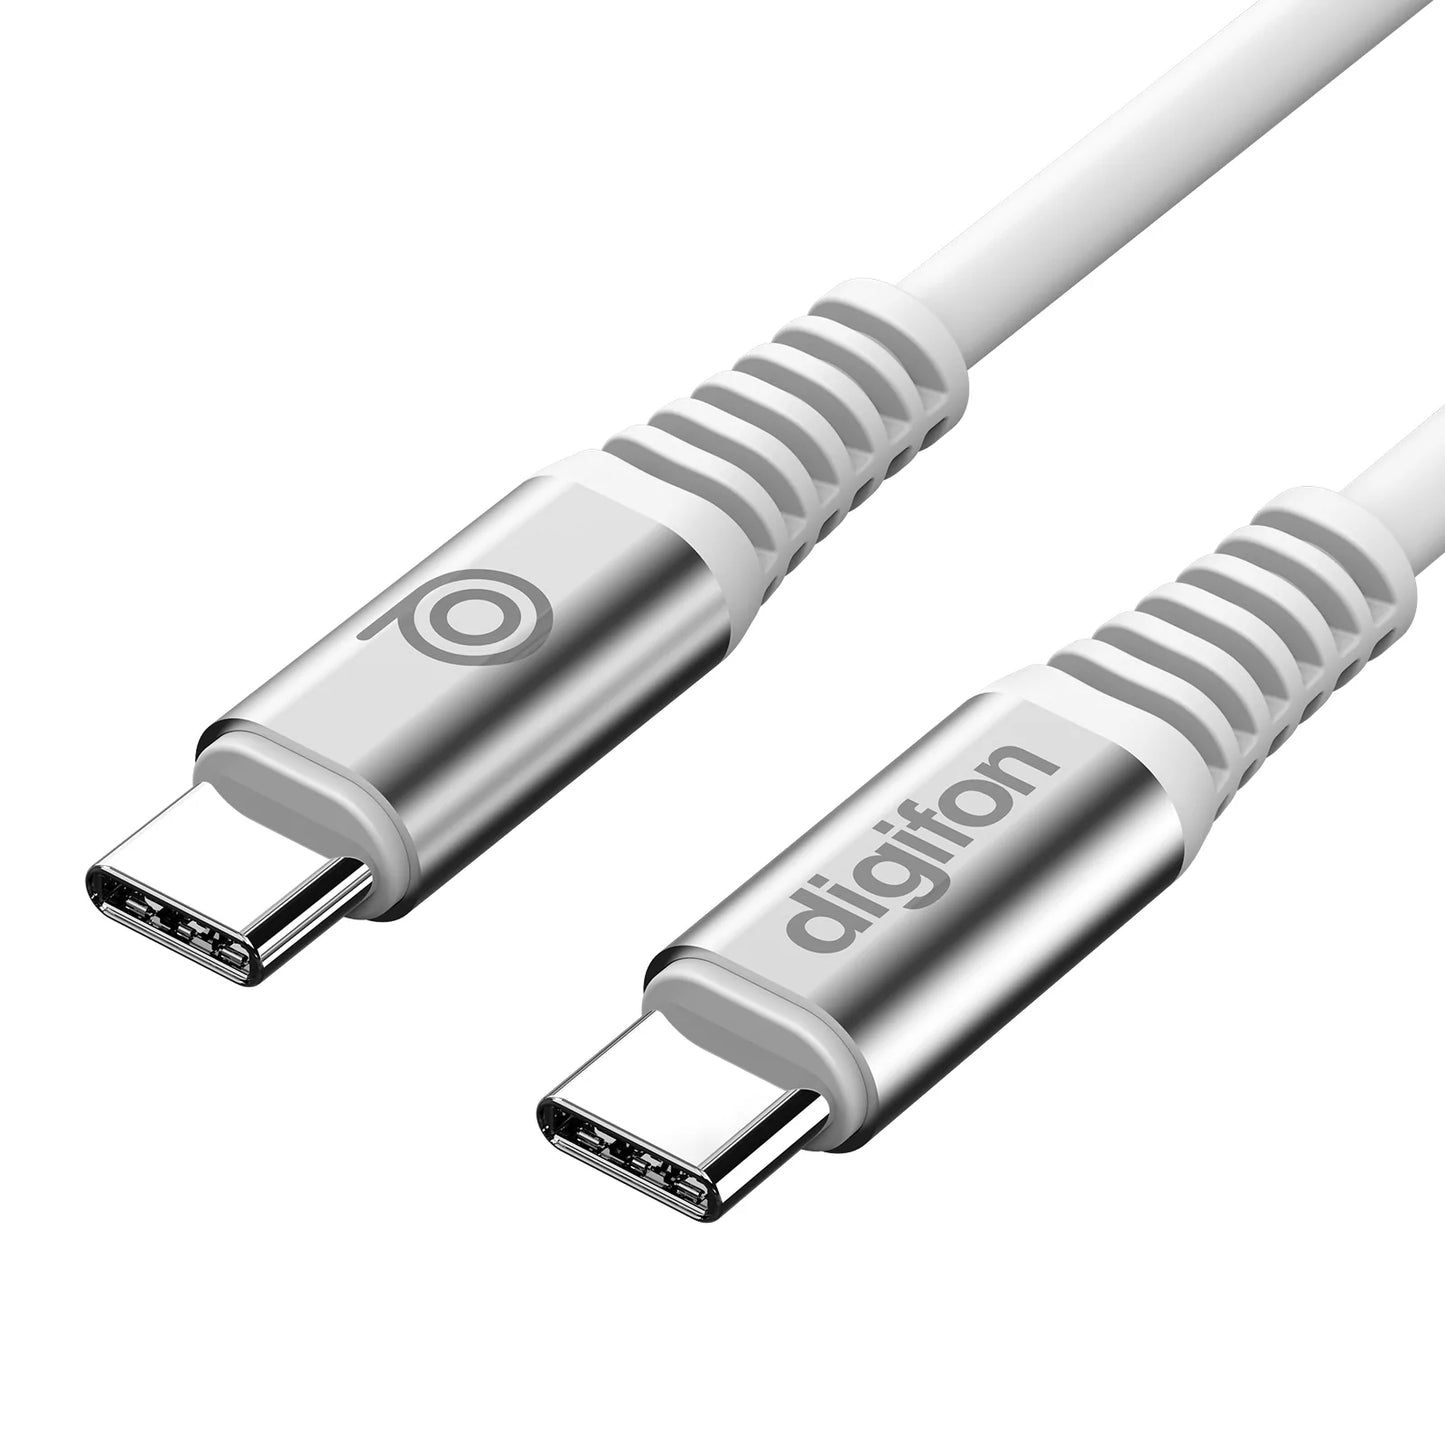 digifon Cheetah Type C to Type C USB Cable 2M White